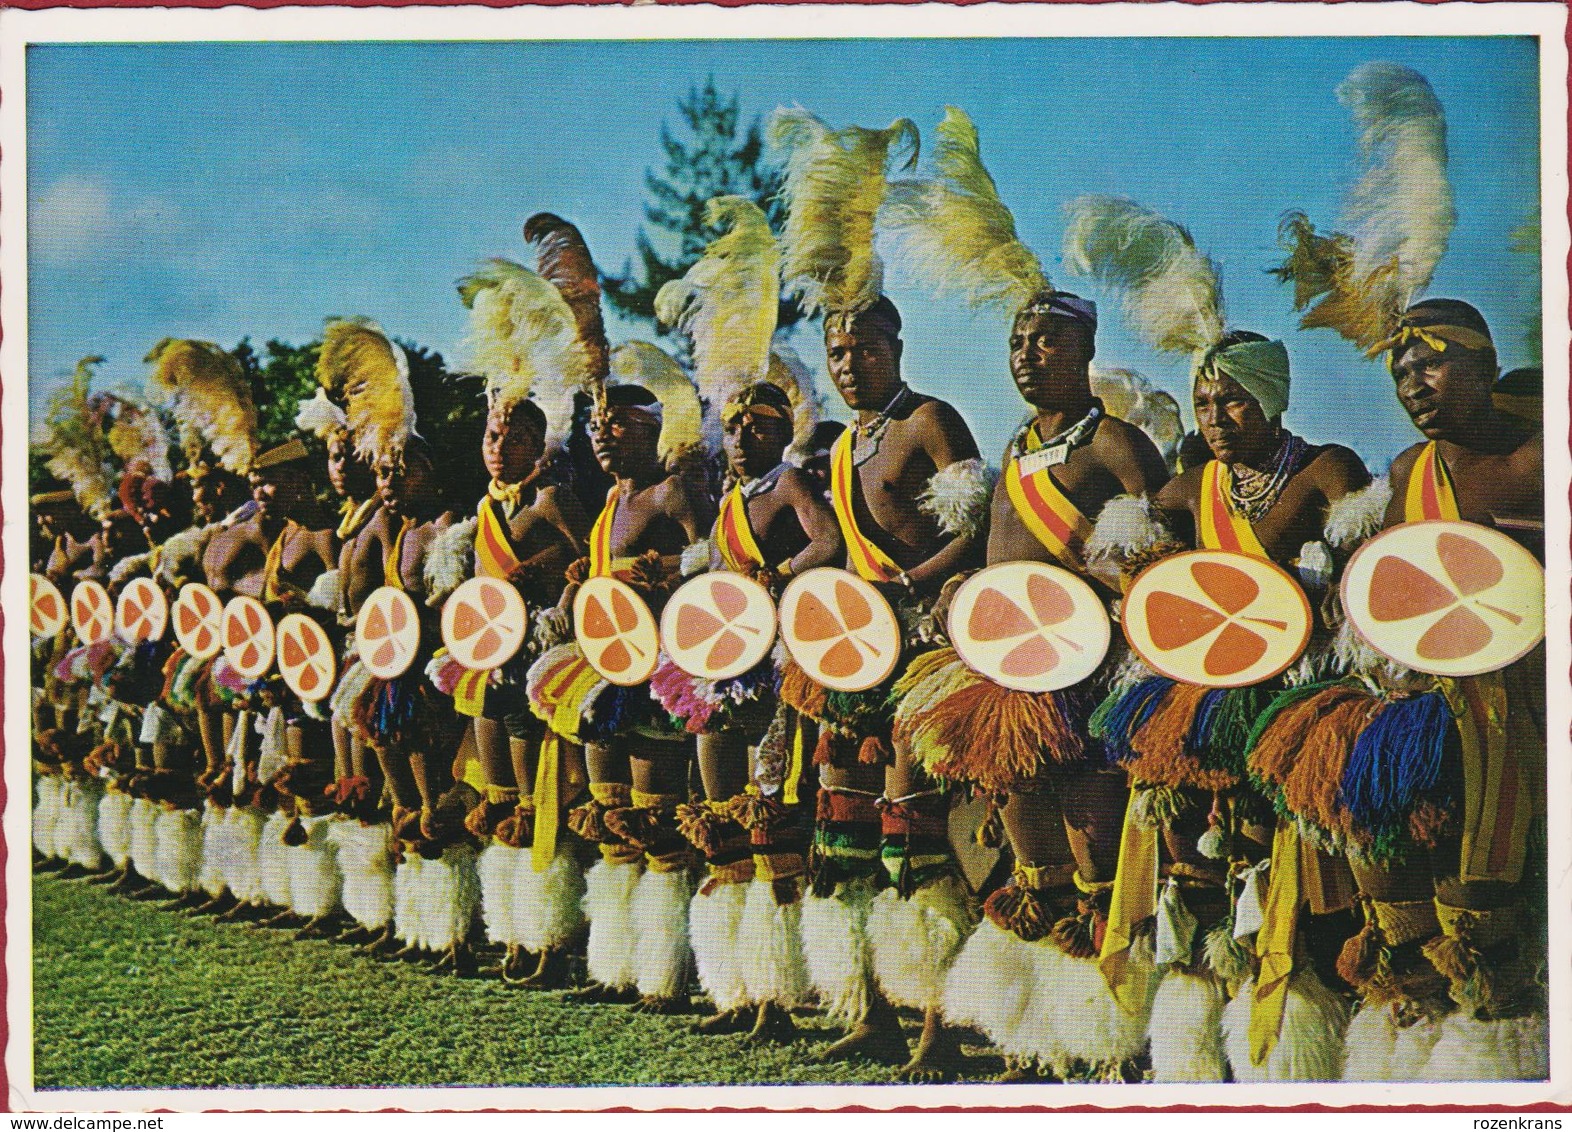 Group African Male Bantou Dancers Afrique Etnique Etnic South Africa Zuid Afrika Du Sud - South Africa